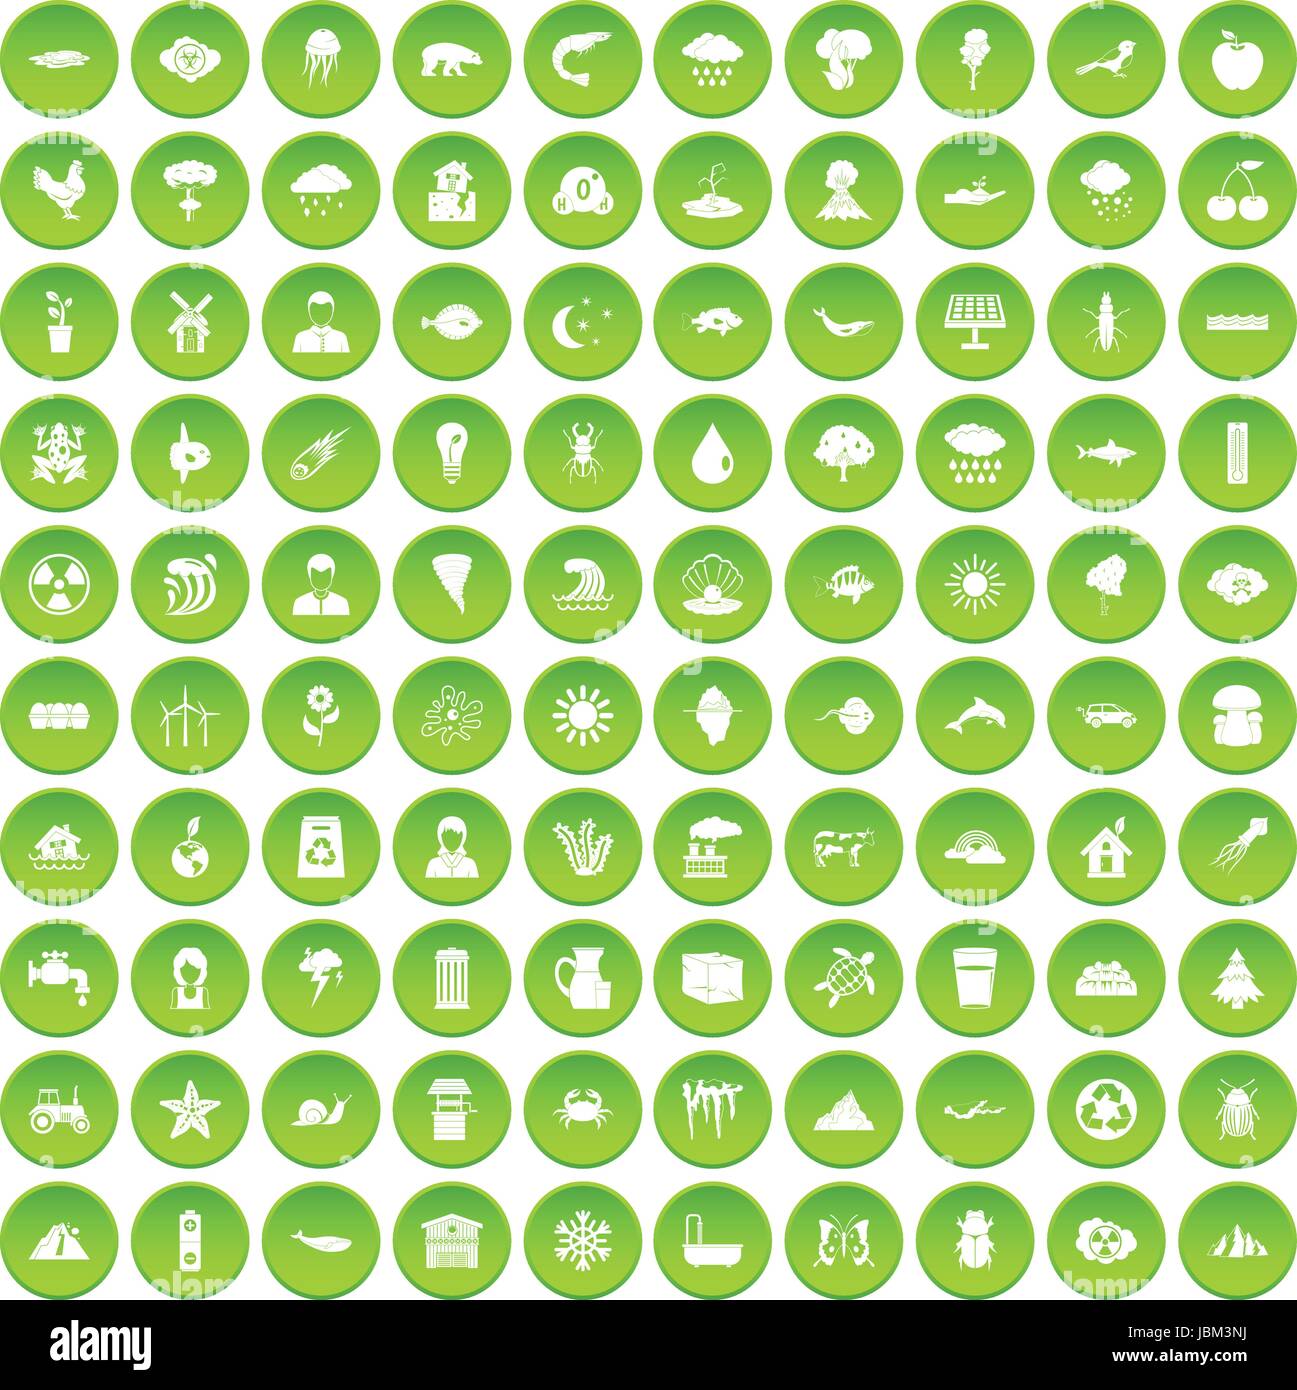 100 earth icons set green circle Stock Vector